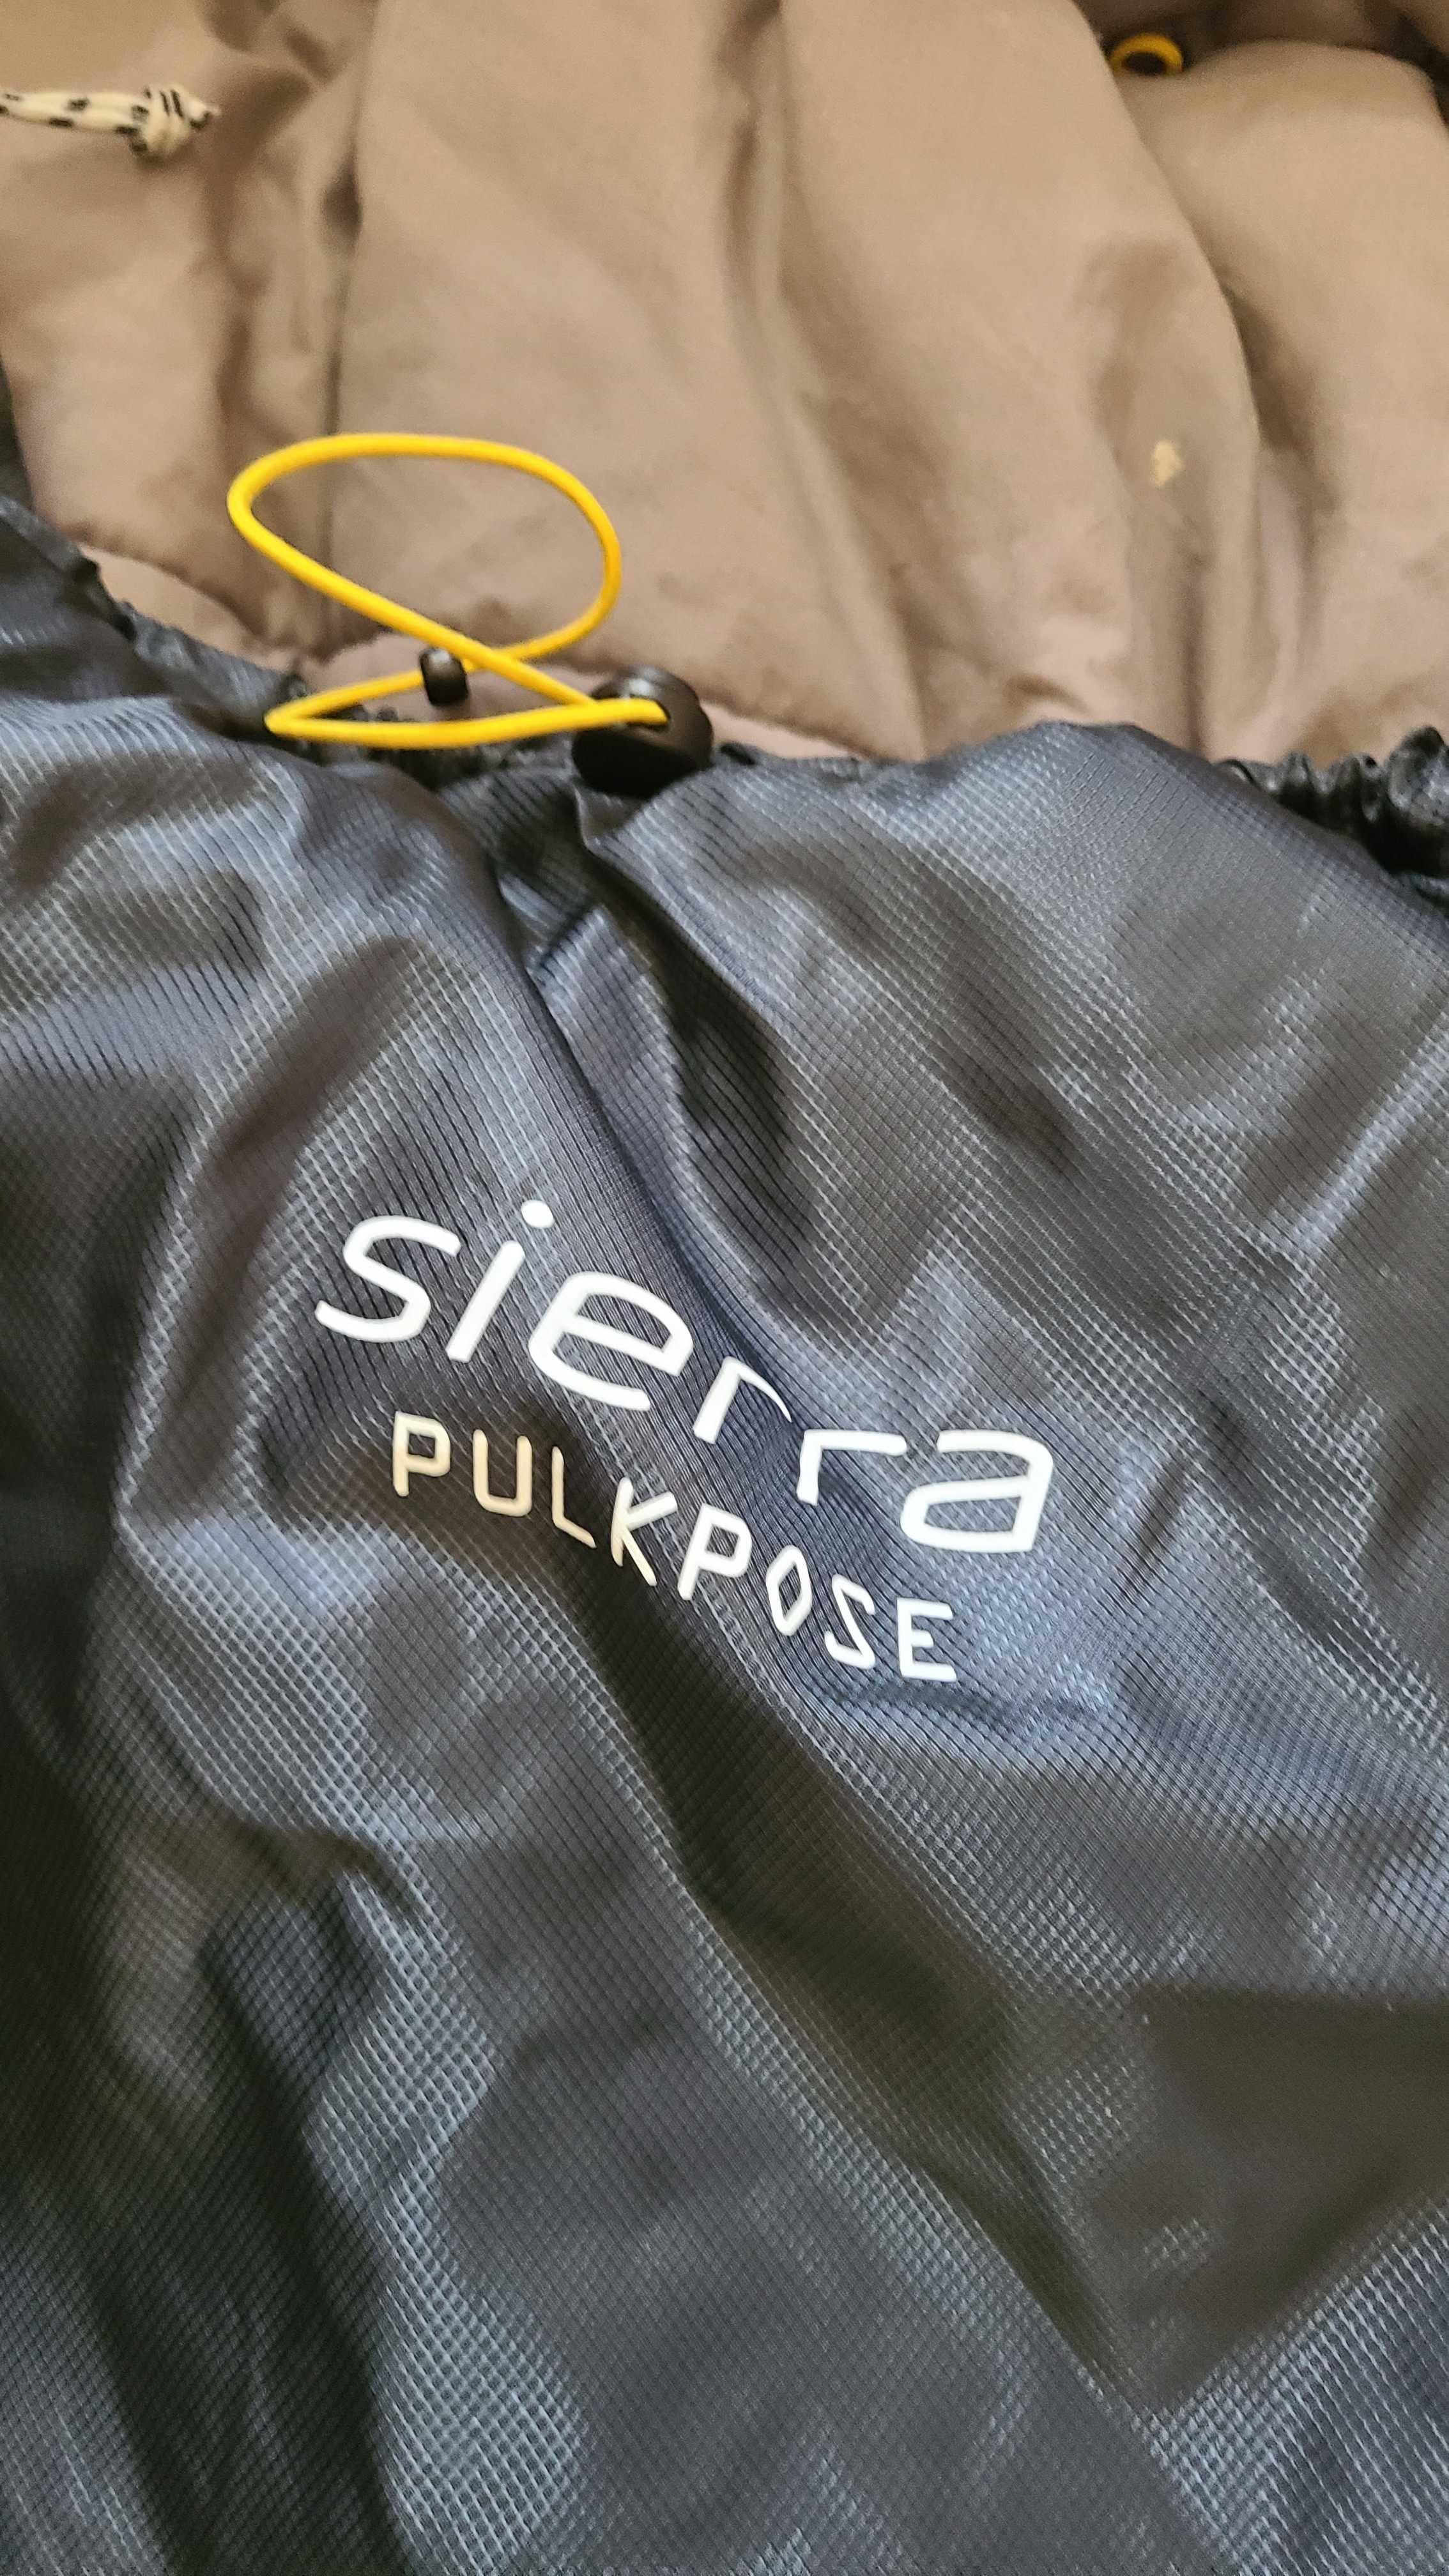 Продам спальник Sierra Pulkpose